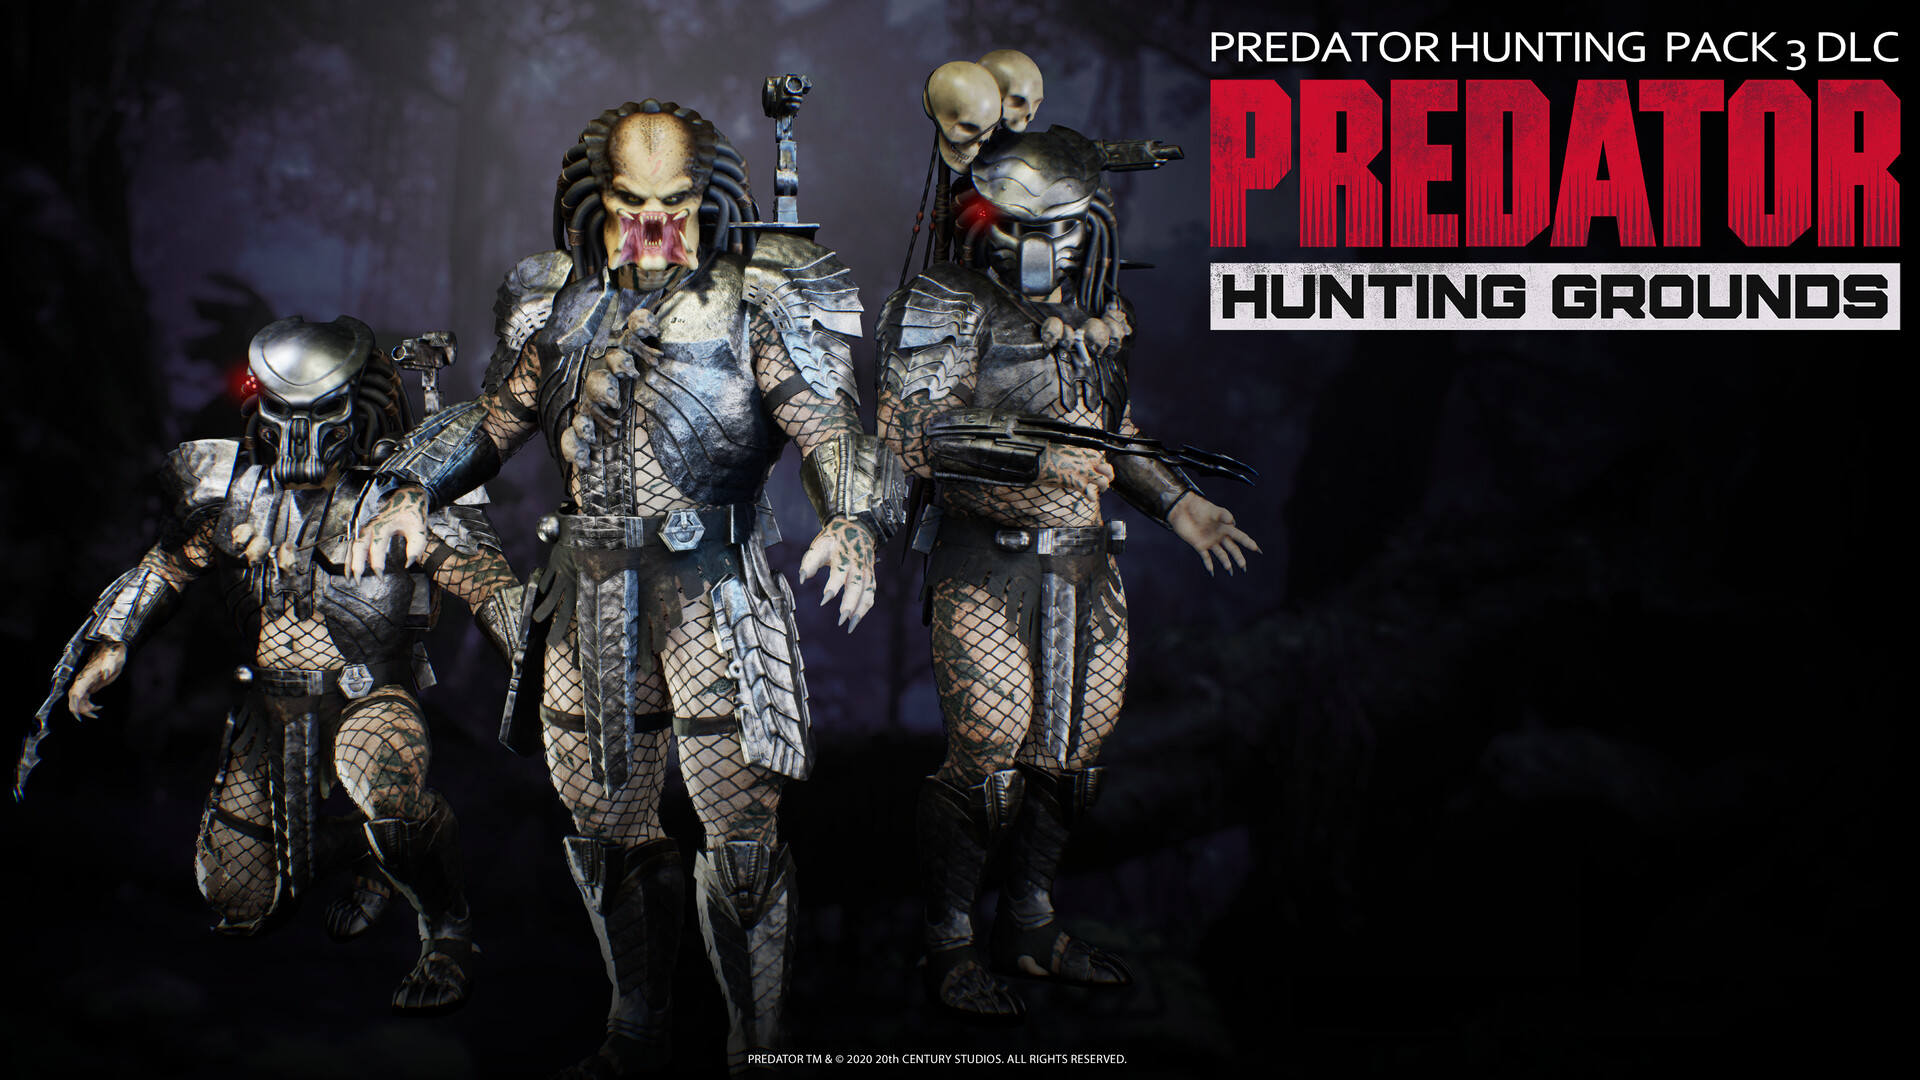 Predator: Hunting Grounds - Hunting Party DLC Bundle 3 Featured Screenshot #1